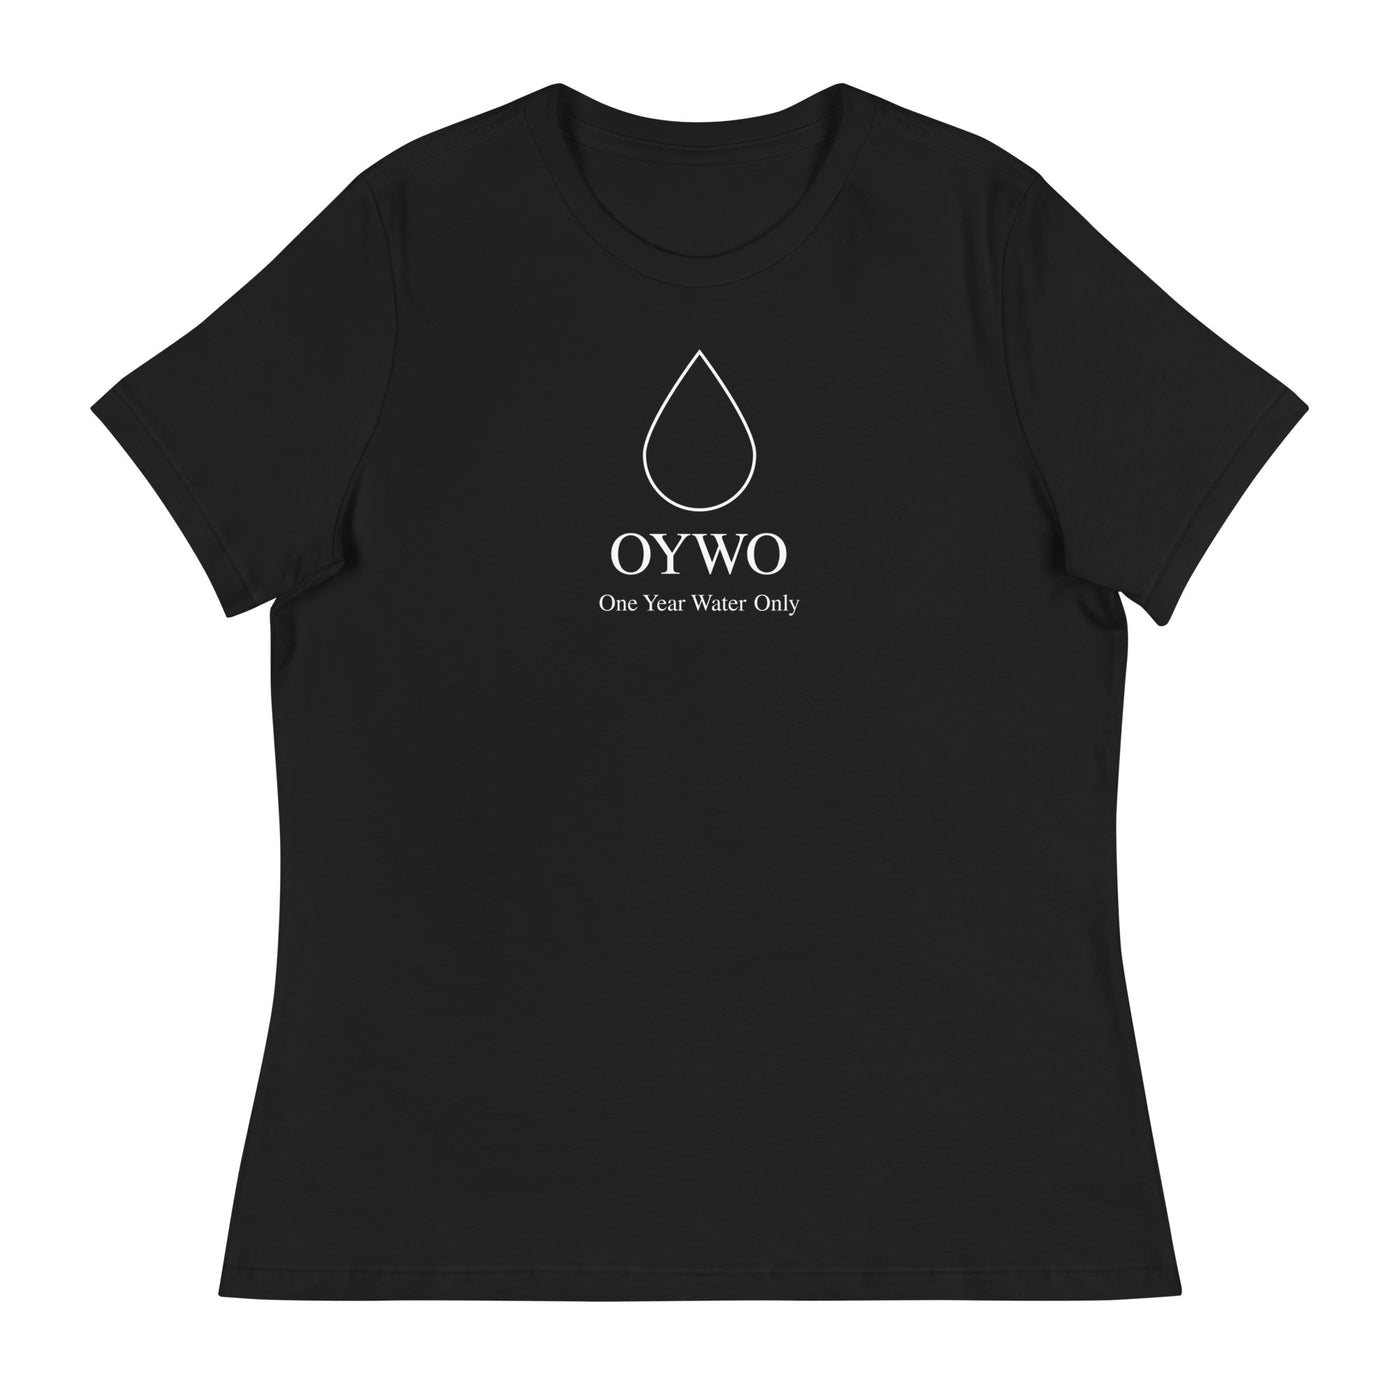 OYWO Black Women's T-Shirt